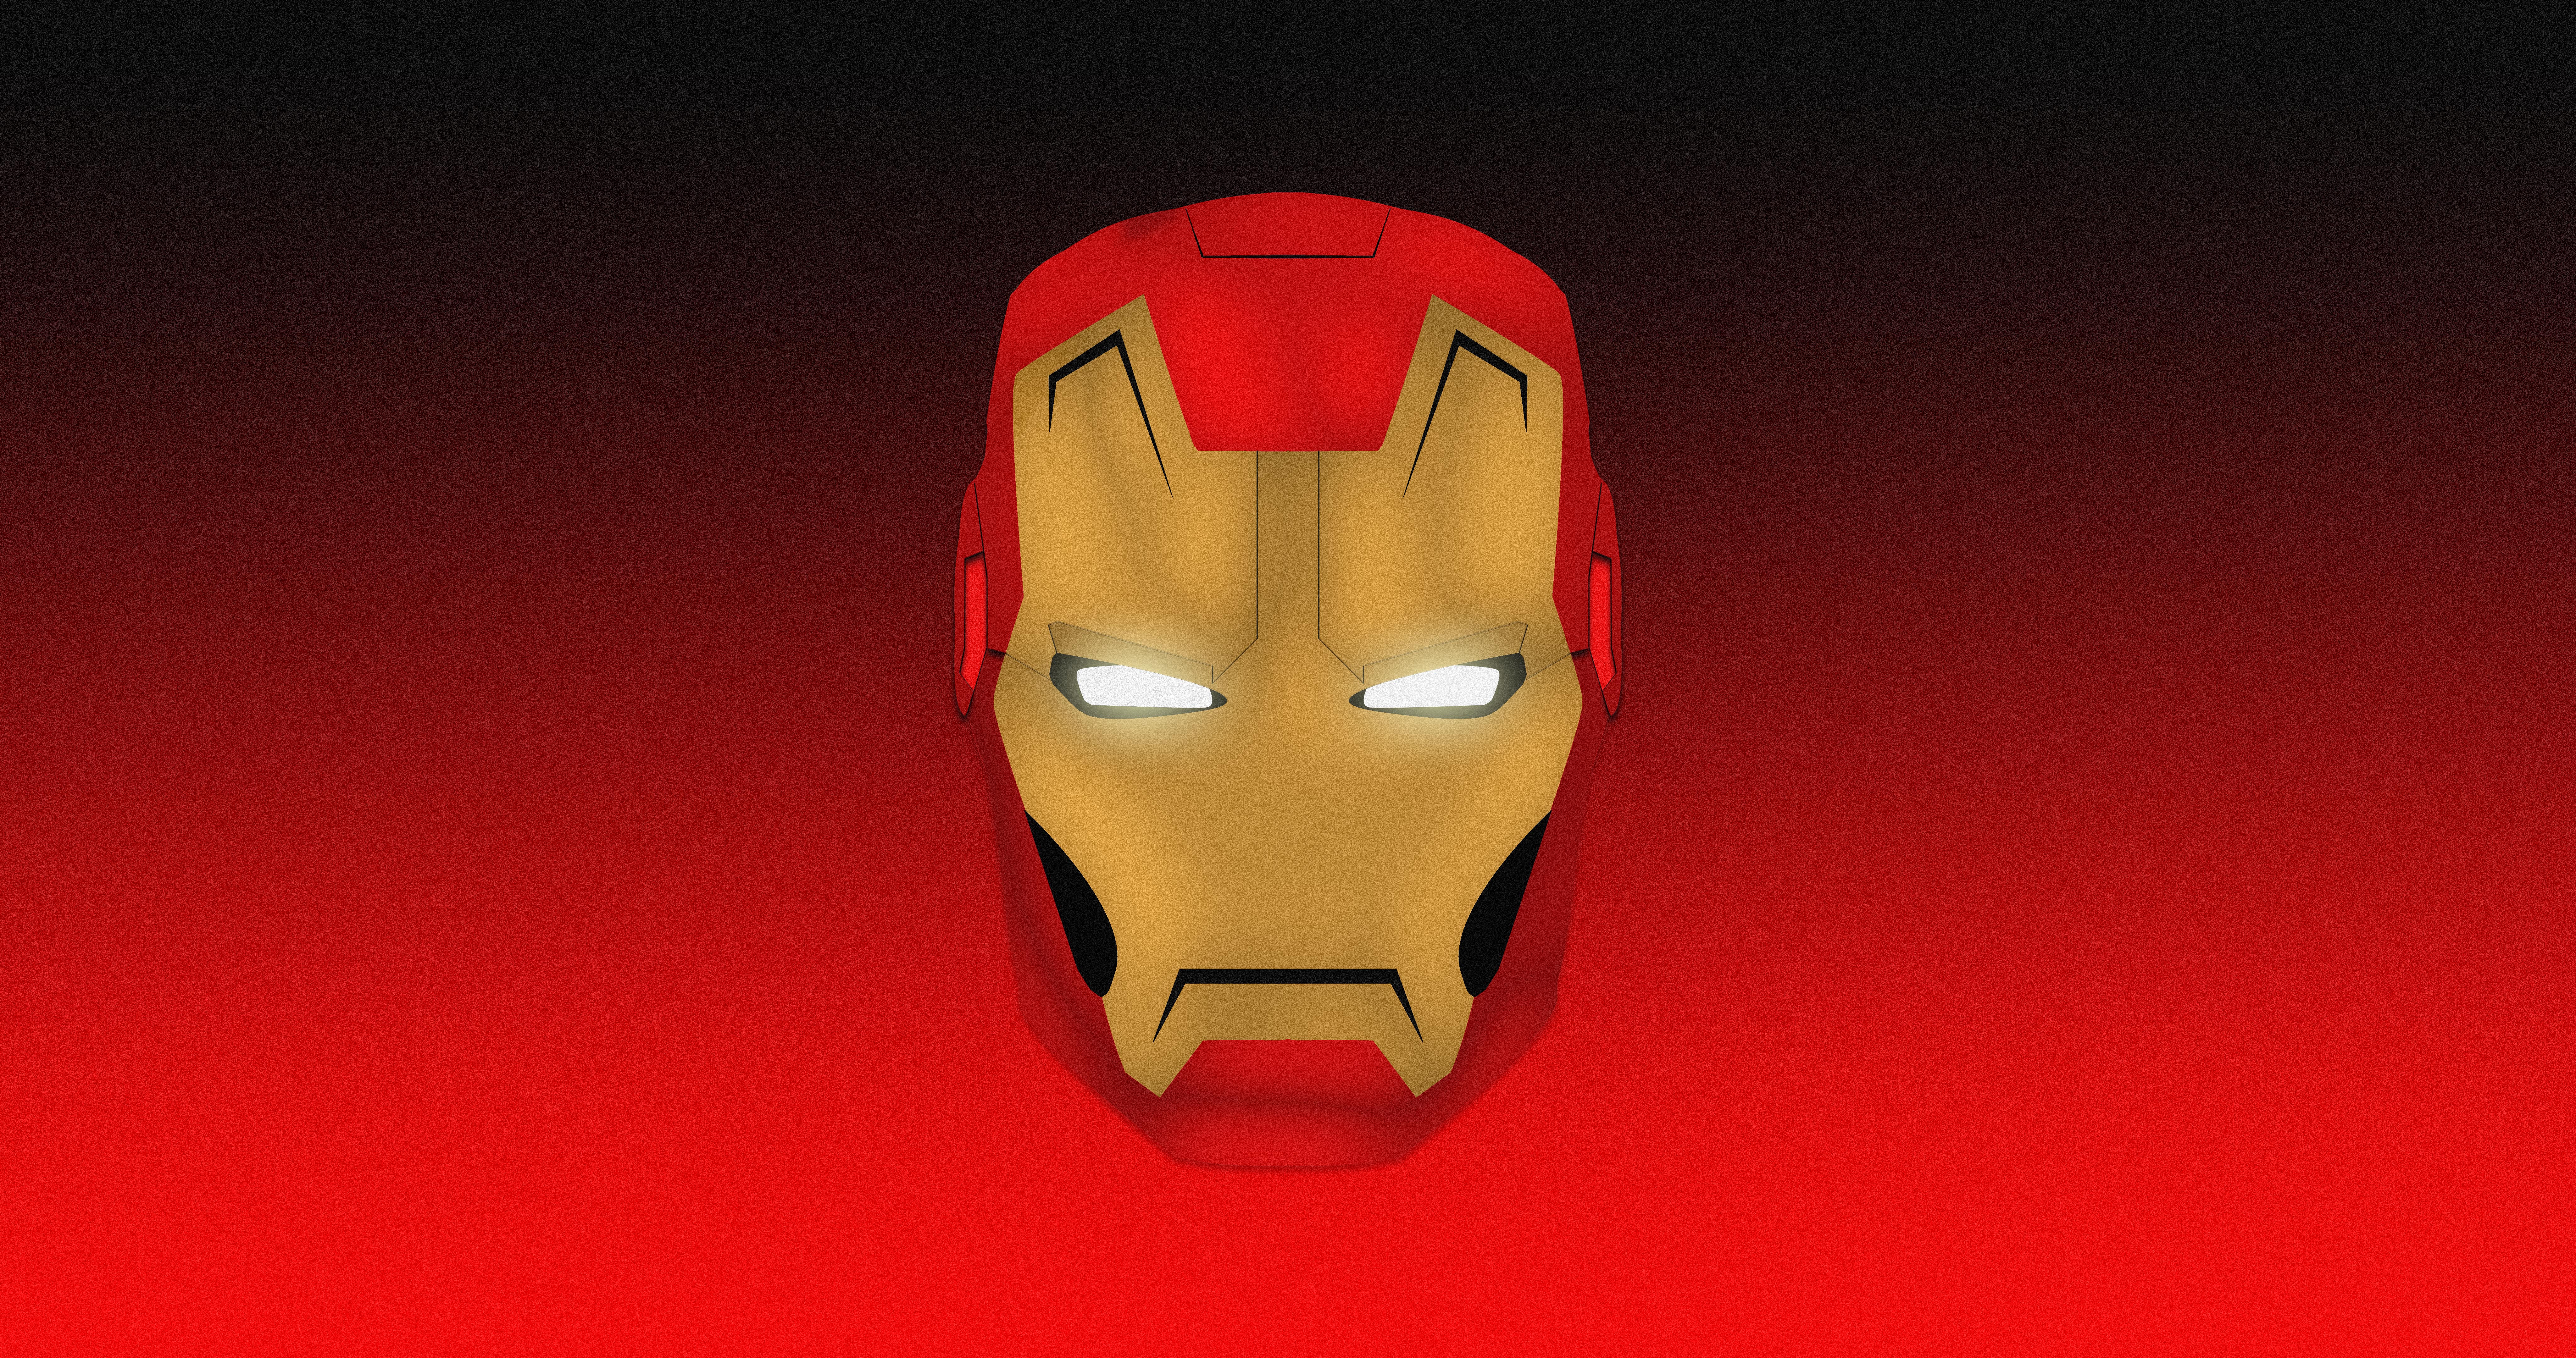 General 8192x4320 Iron Man Marvel Comics Marvel Cinematic Universe comics comic art superhero Tony Stark red helmet robot technology minimalism gradient